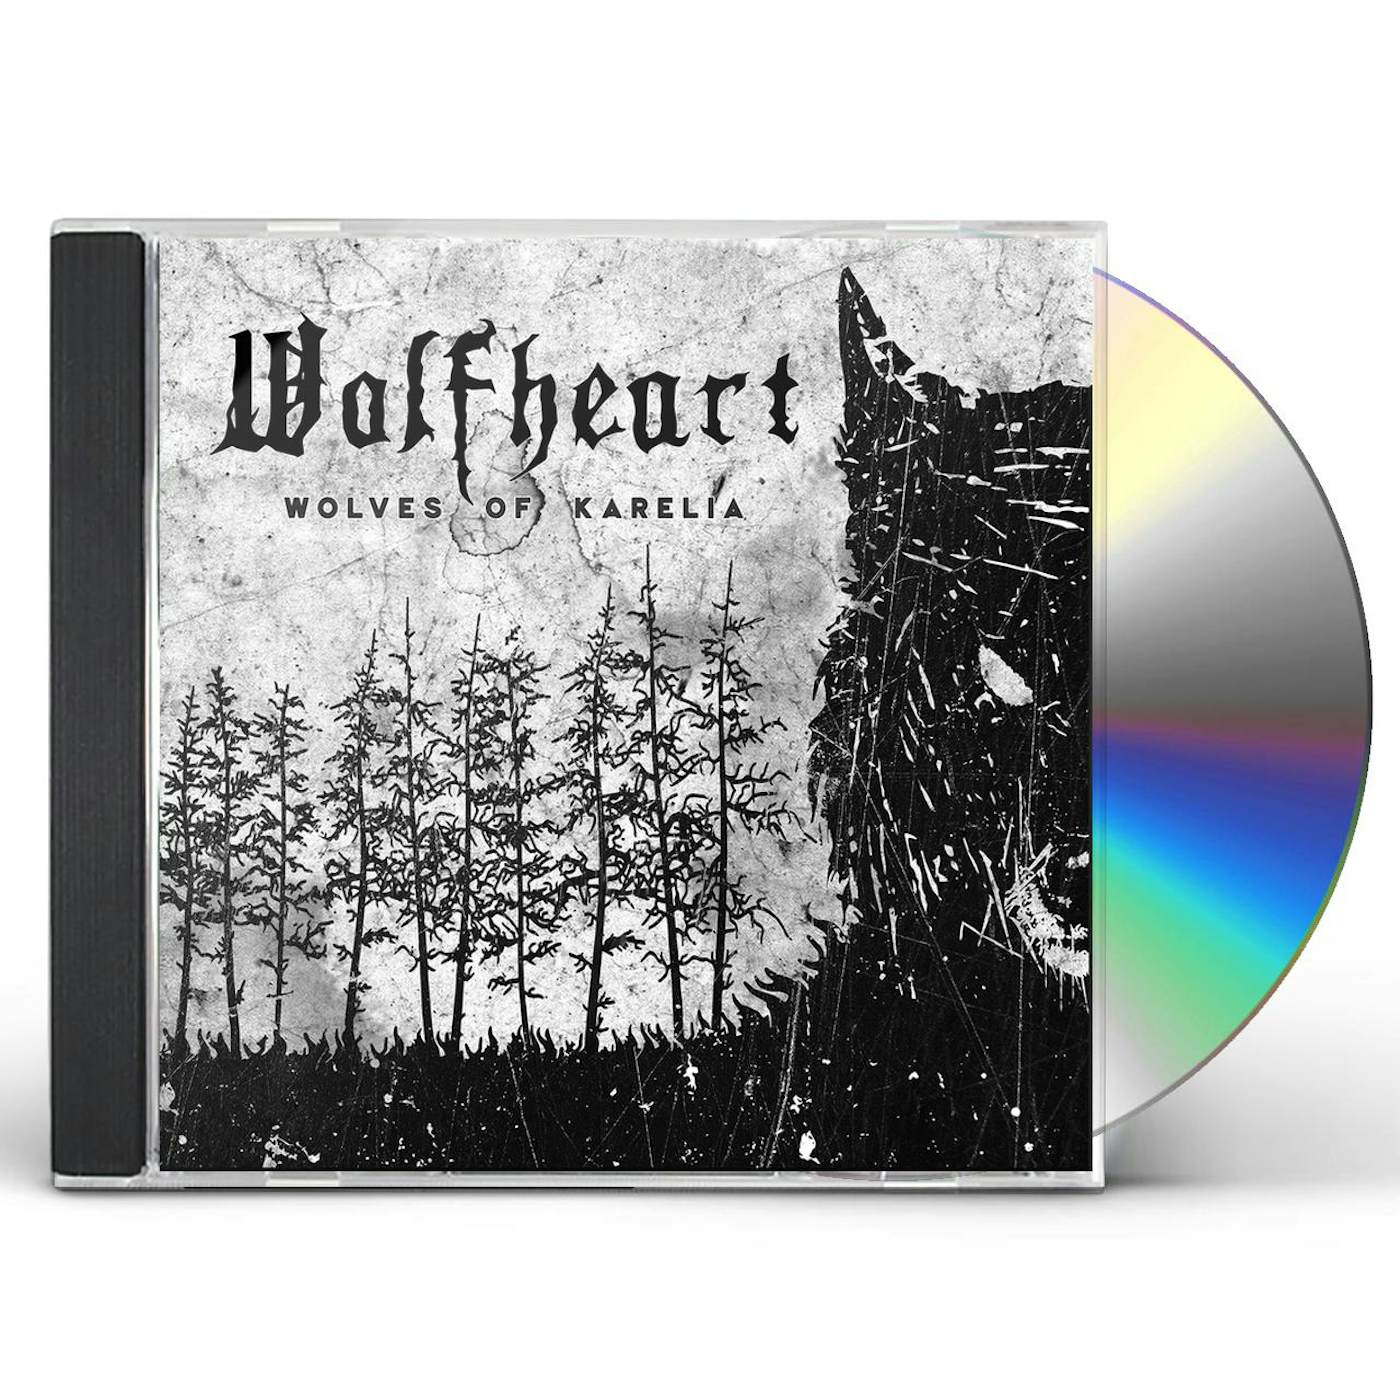 Wolfheart WOLVES OF KARELIA CD